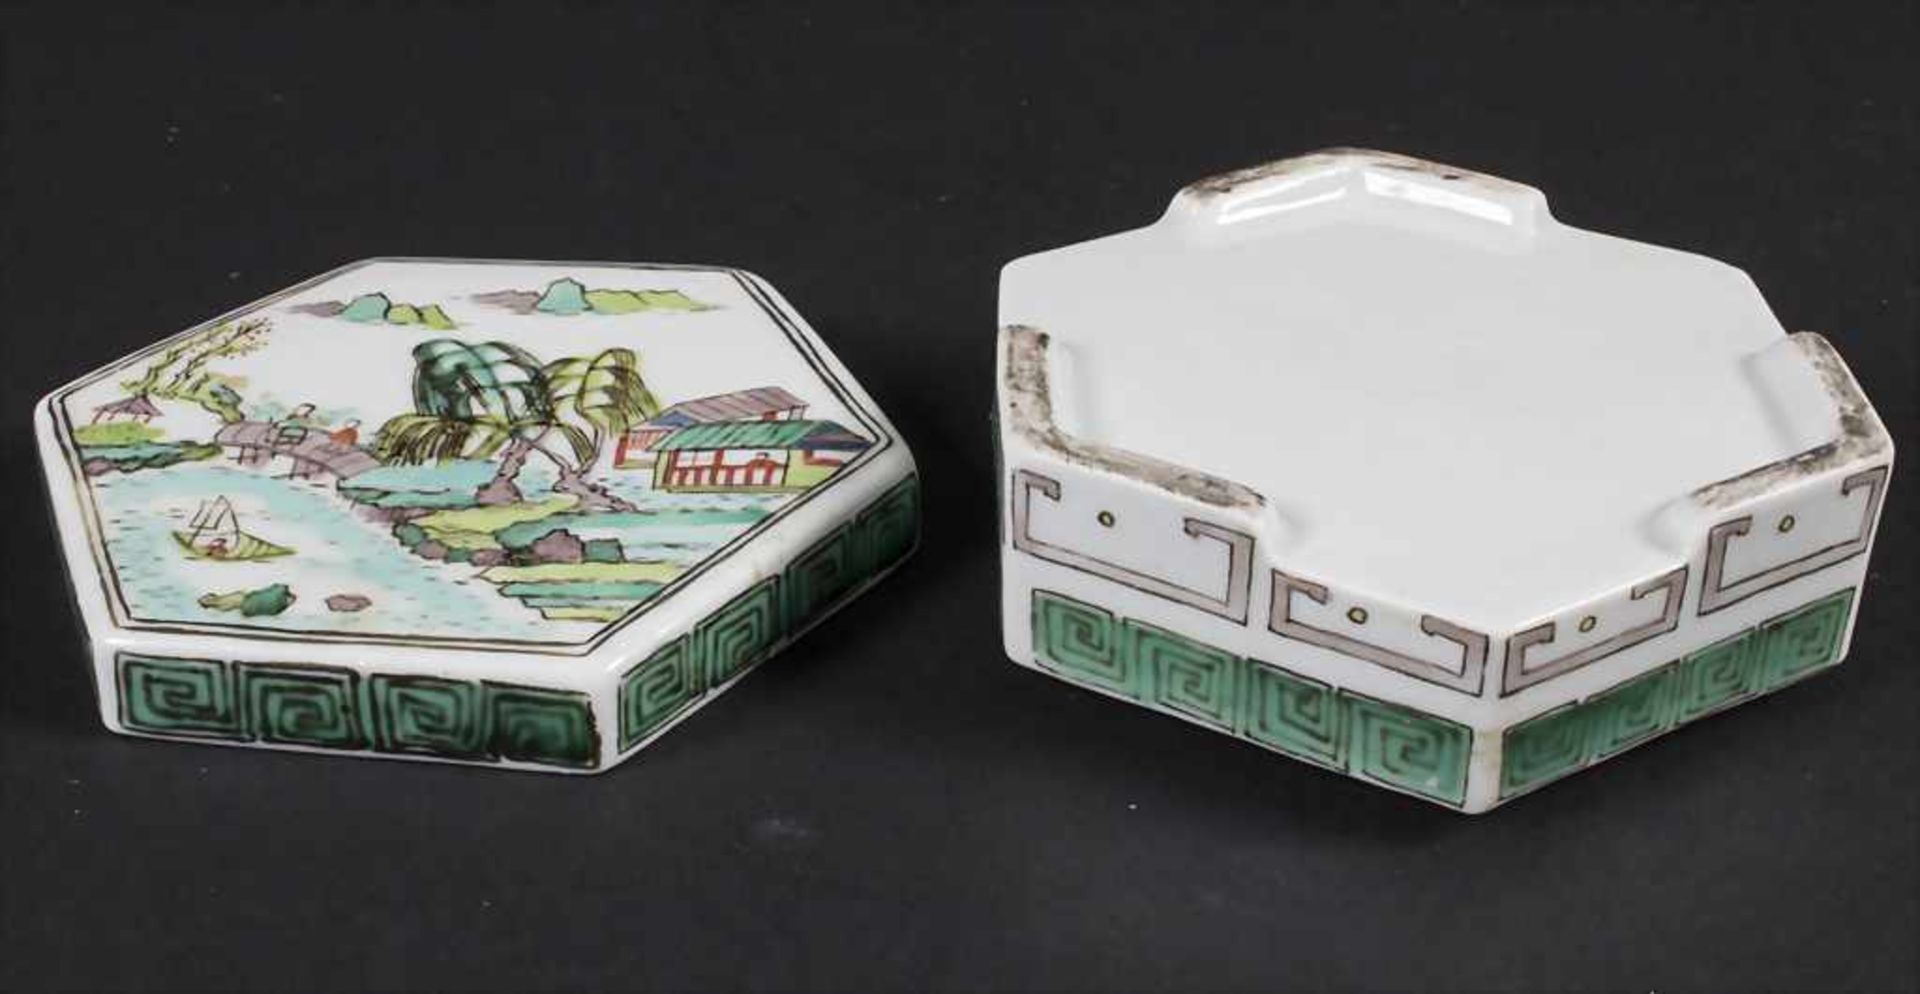 Porzellan-Deckeldose / A porcelain lidded box, China, Qing-Dynastie, wohl 18. Jh. - Image 5 of 5